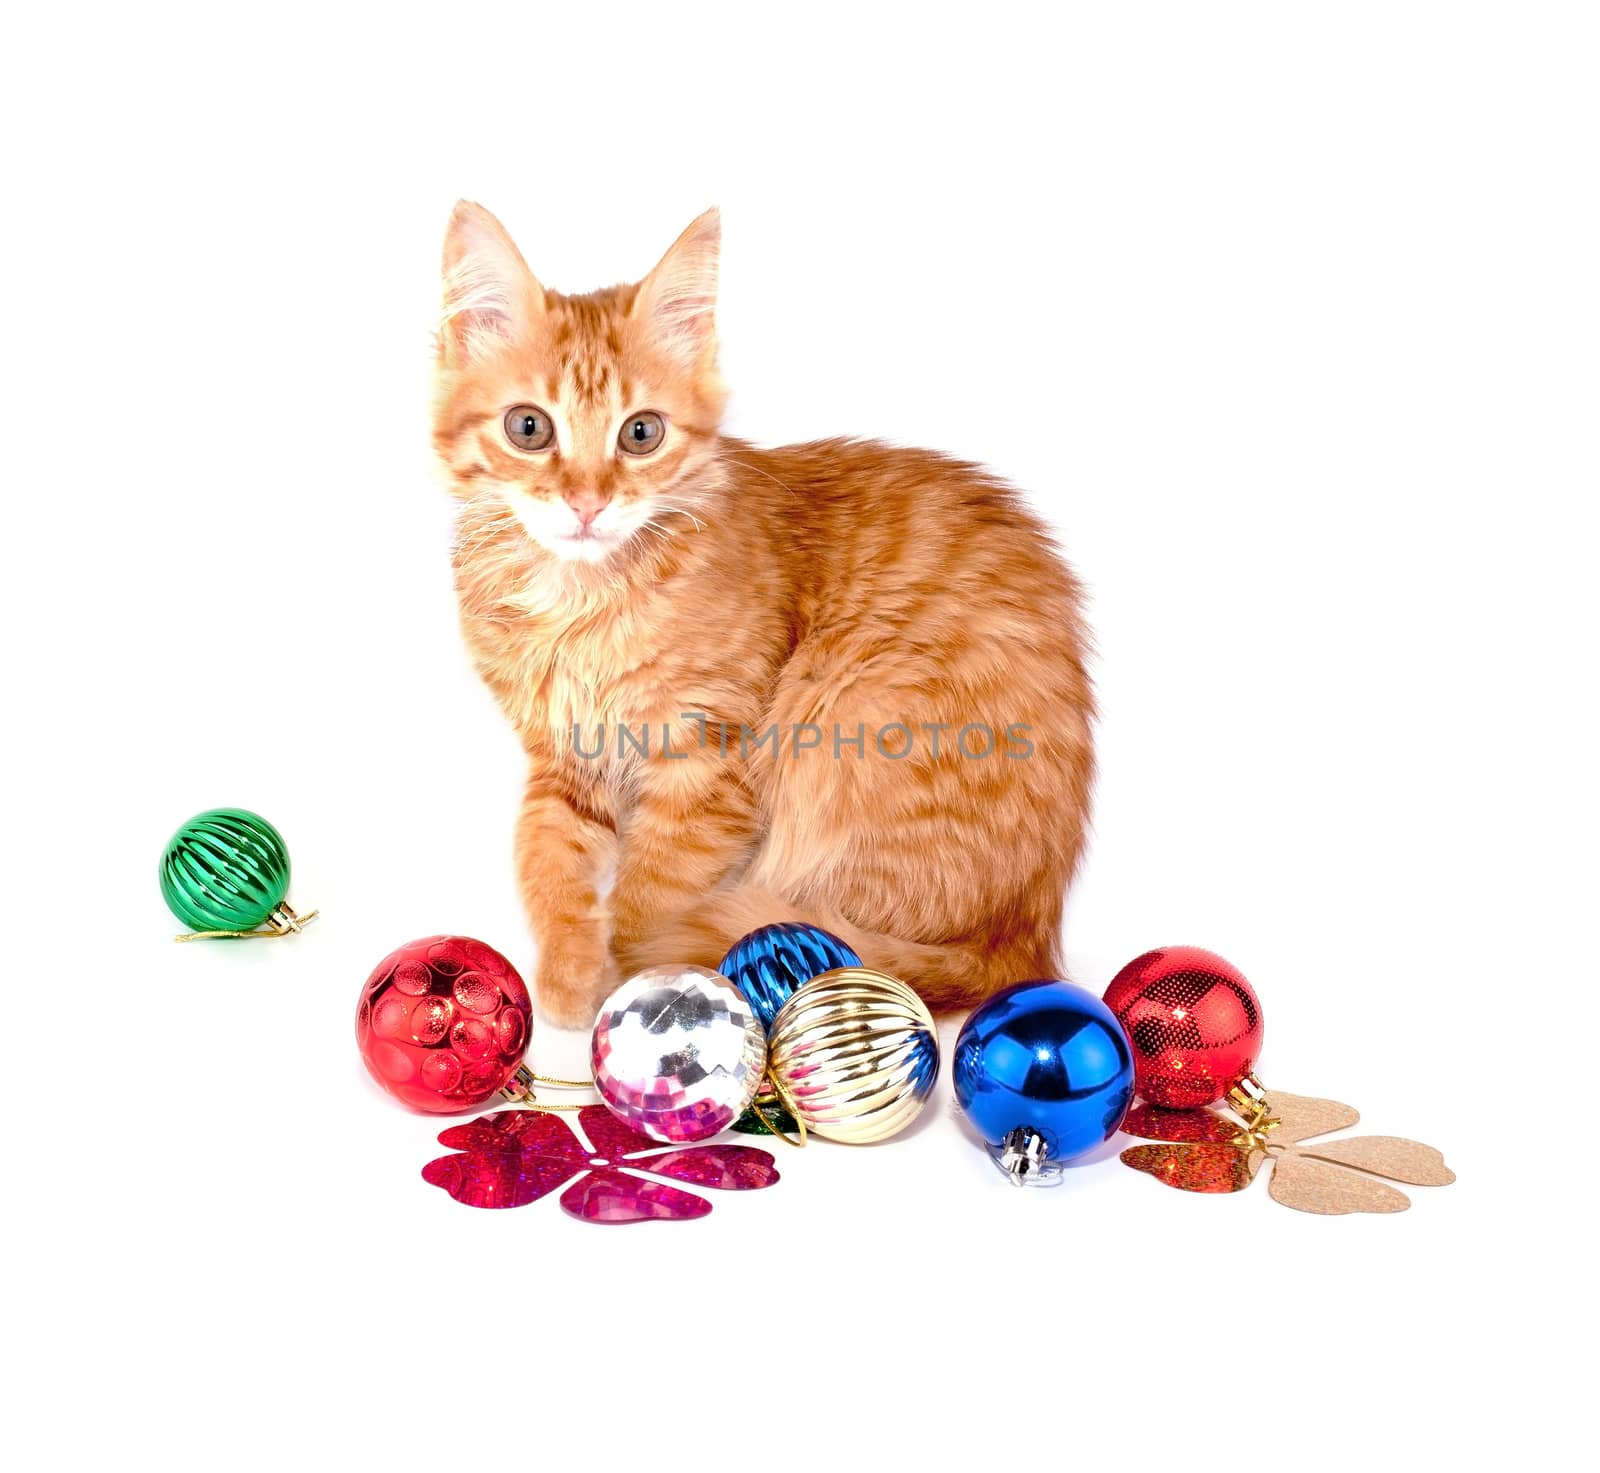 Cat sits among Christmas balls on white background